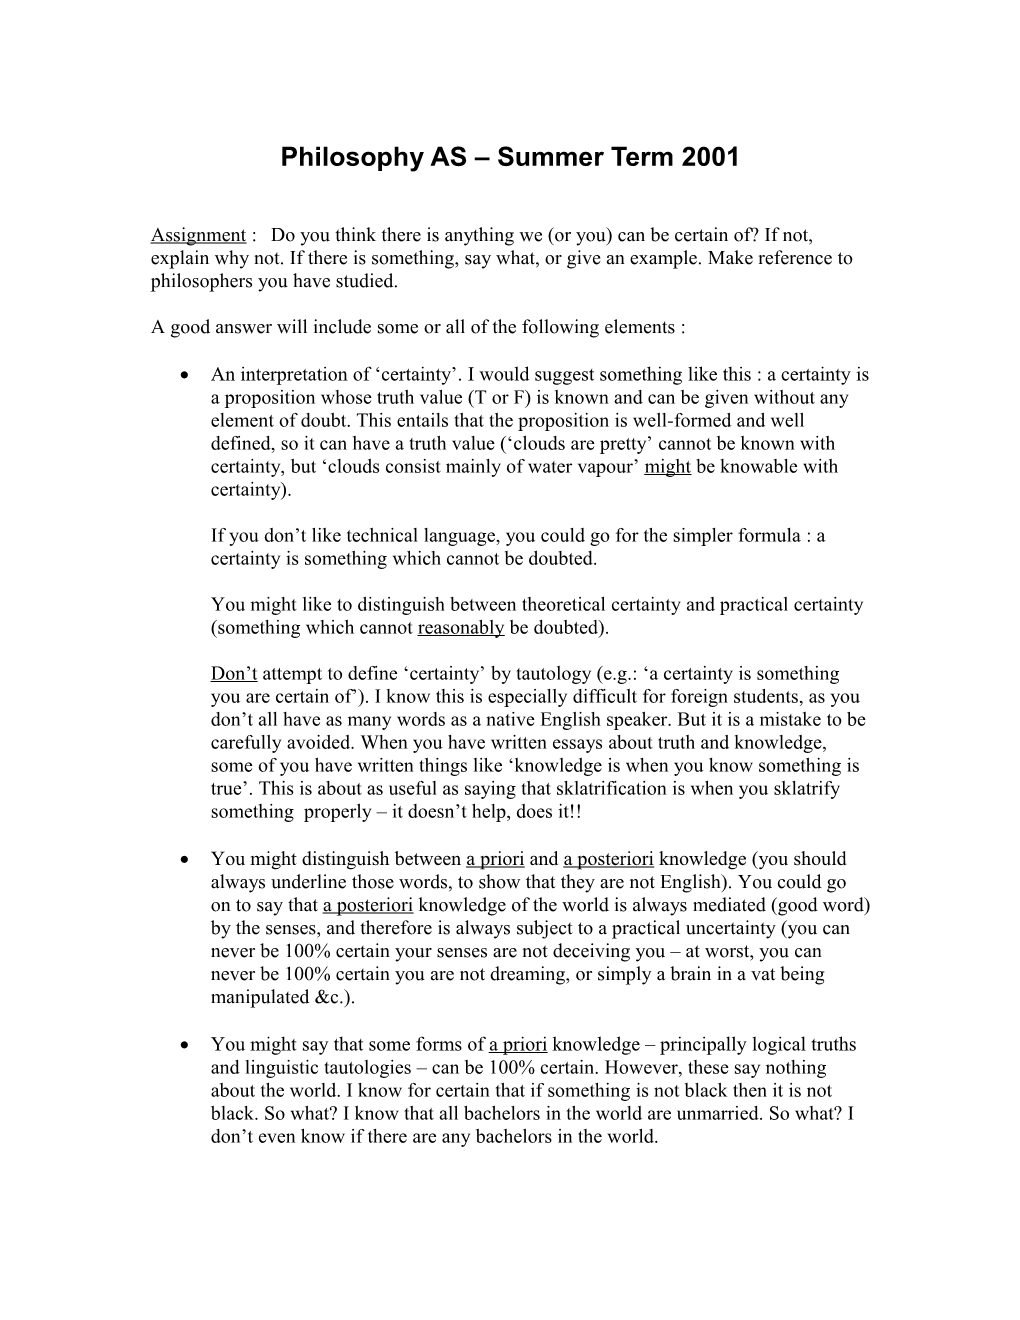 Philosophy AS Summer Term 2001